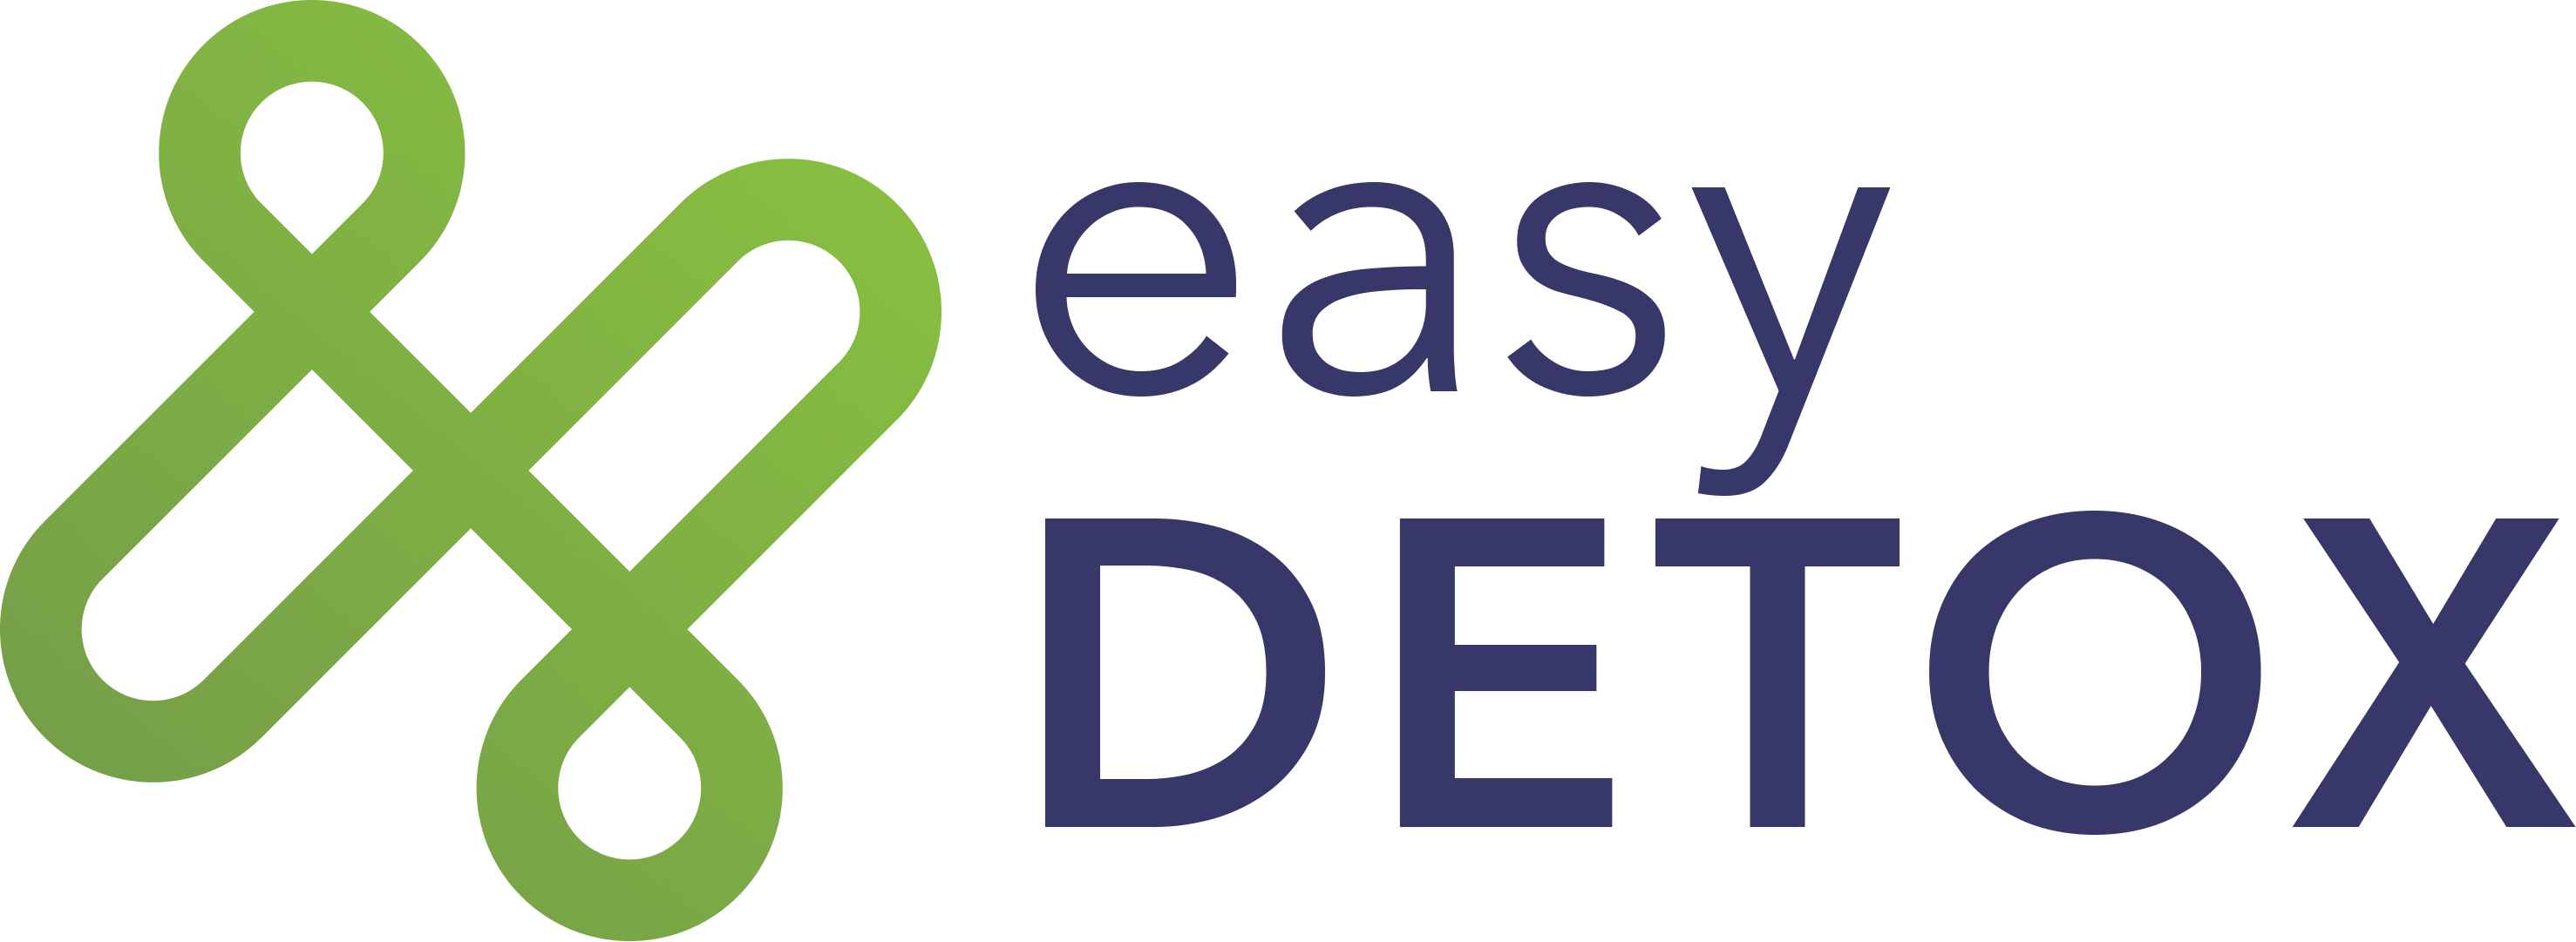 easy detox logo - purple text